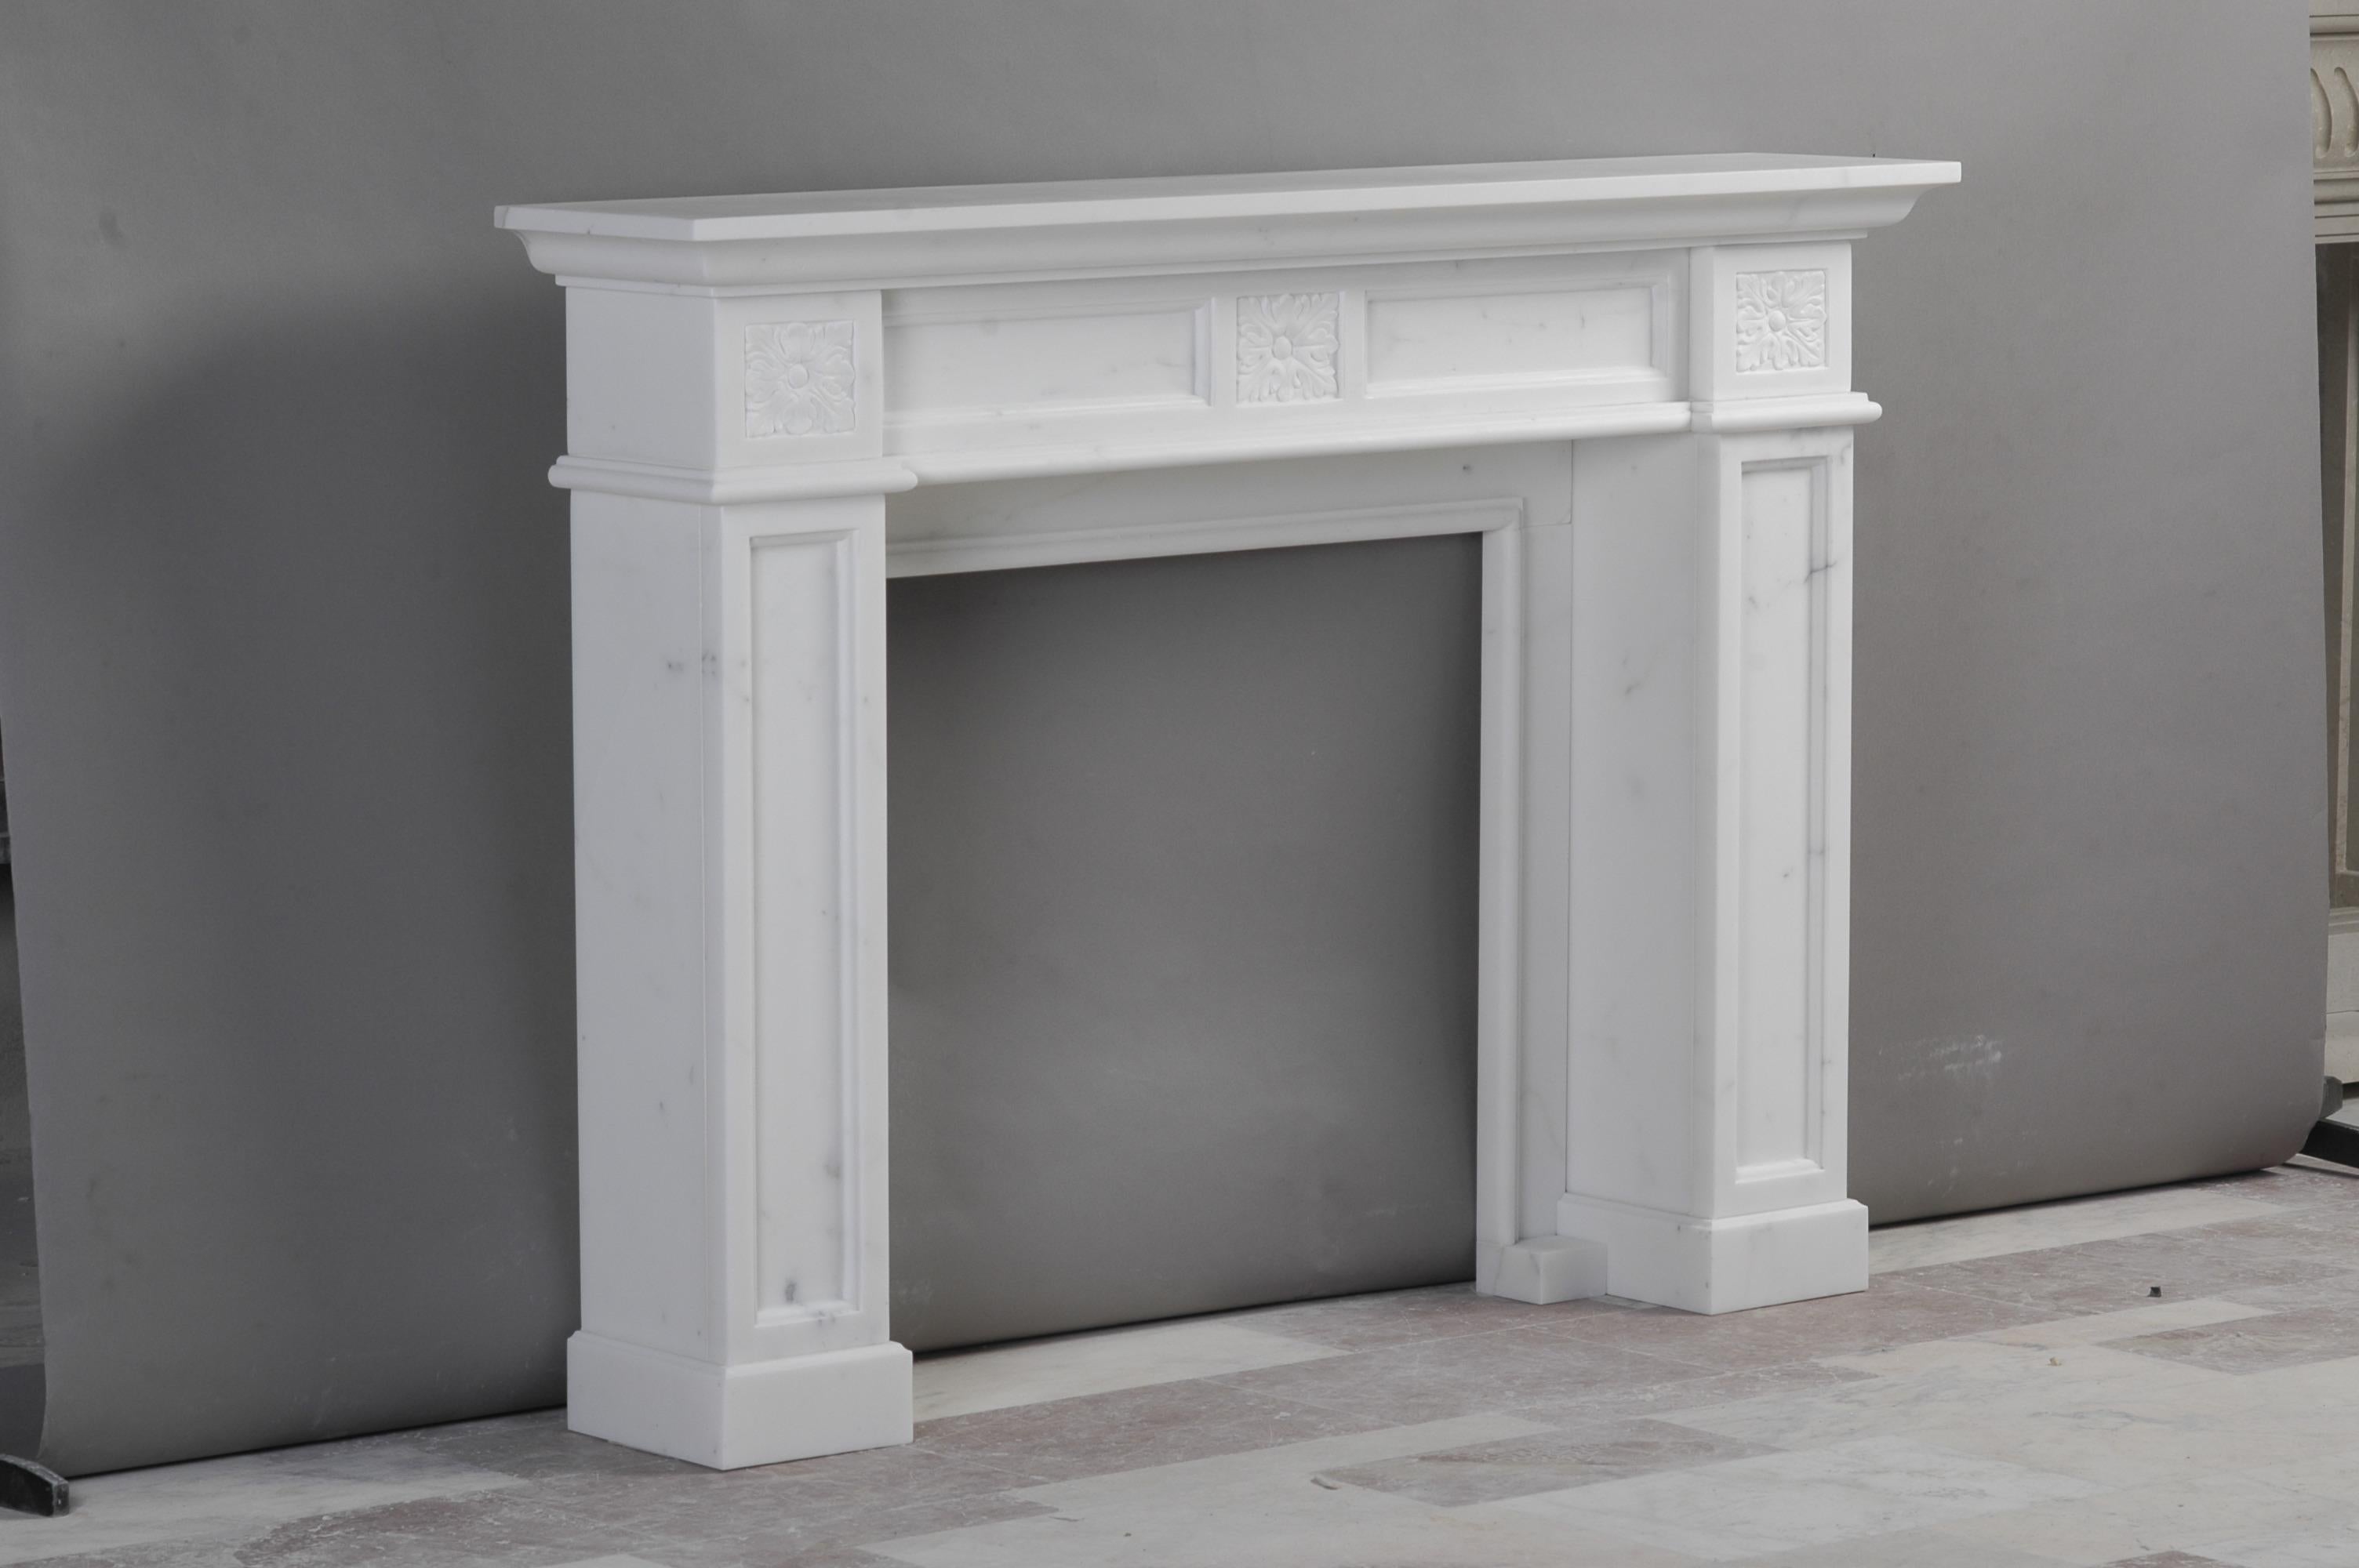 London fireplace in Bianca Carrara marble